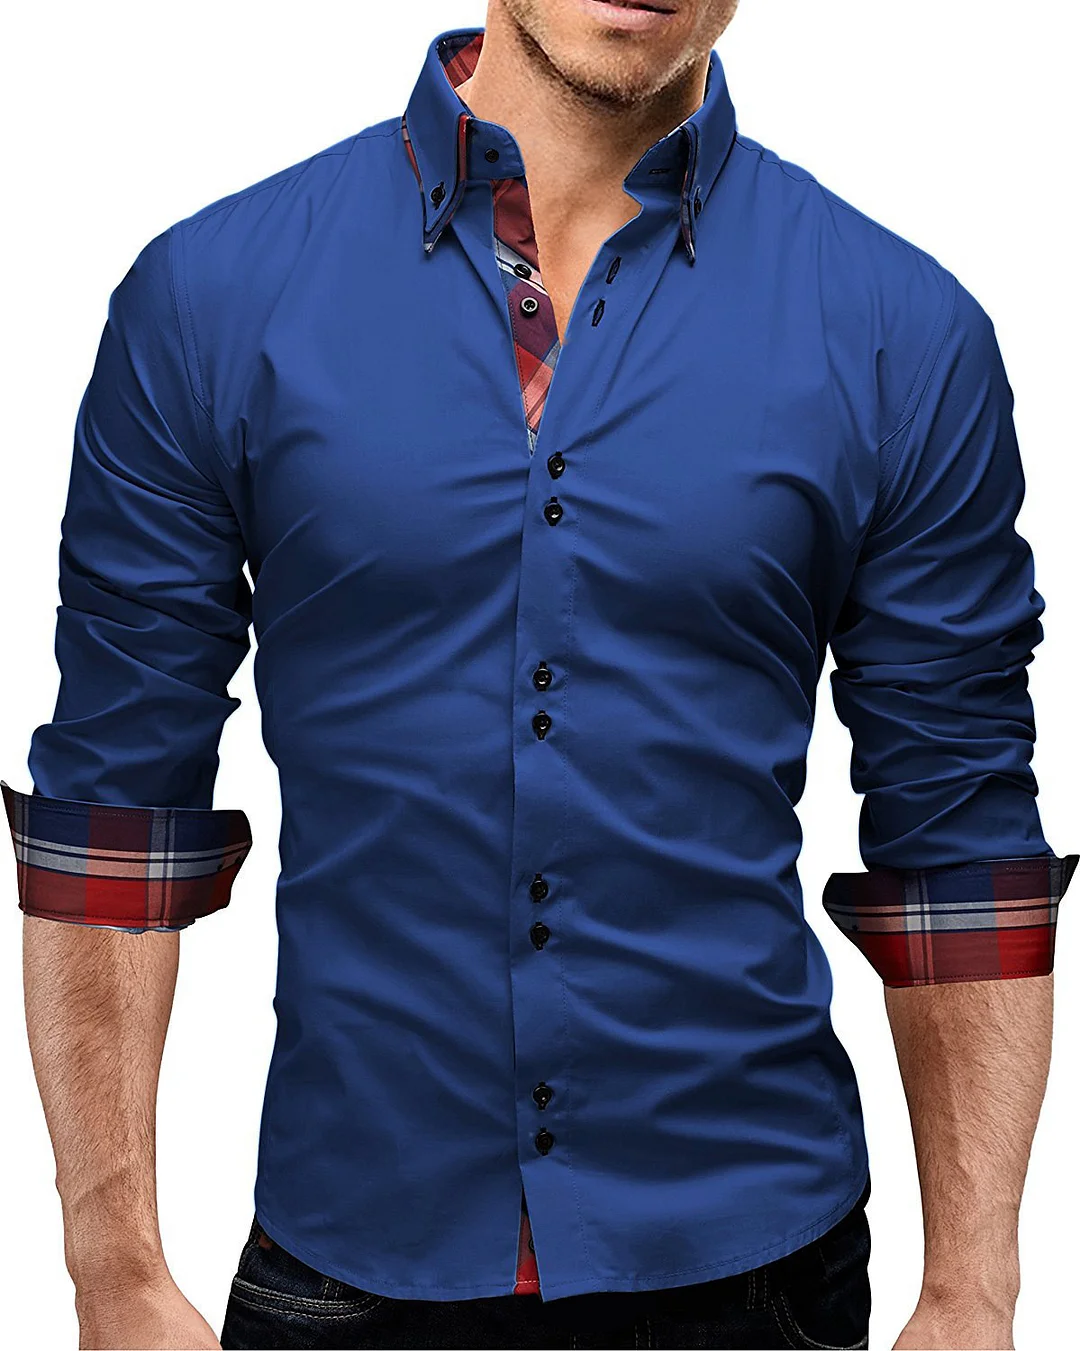 Men's double collar stitching plaid shirt